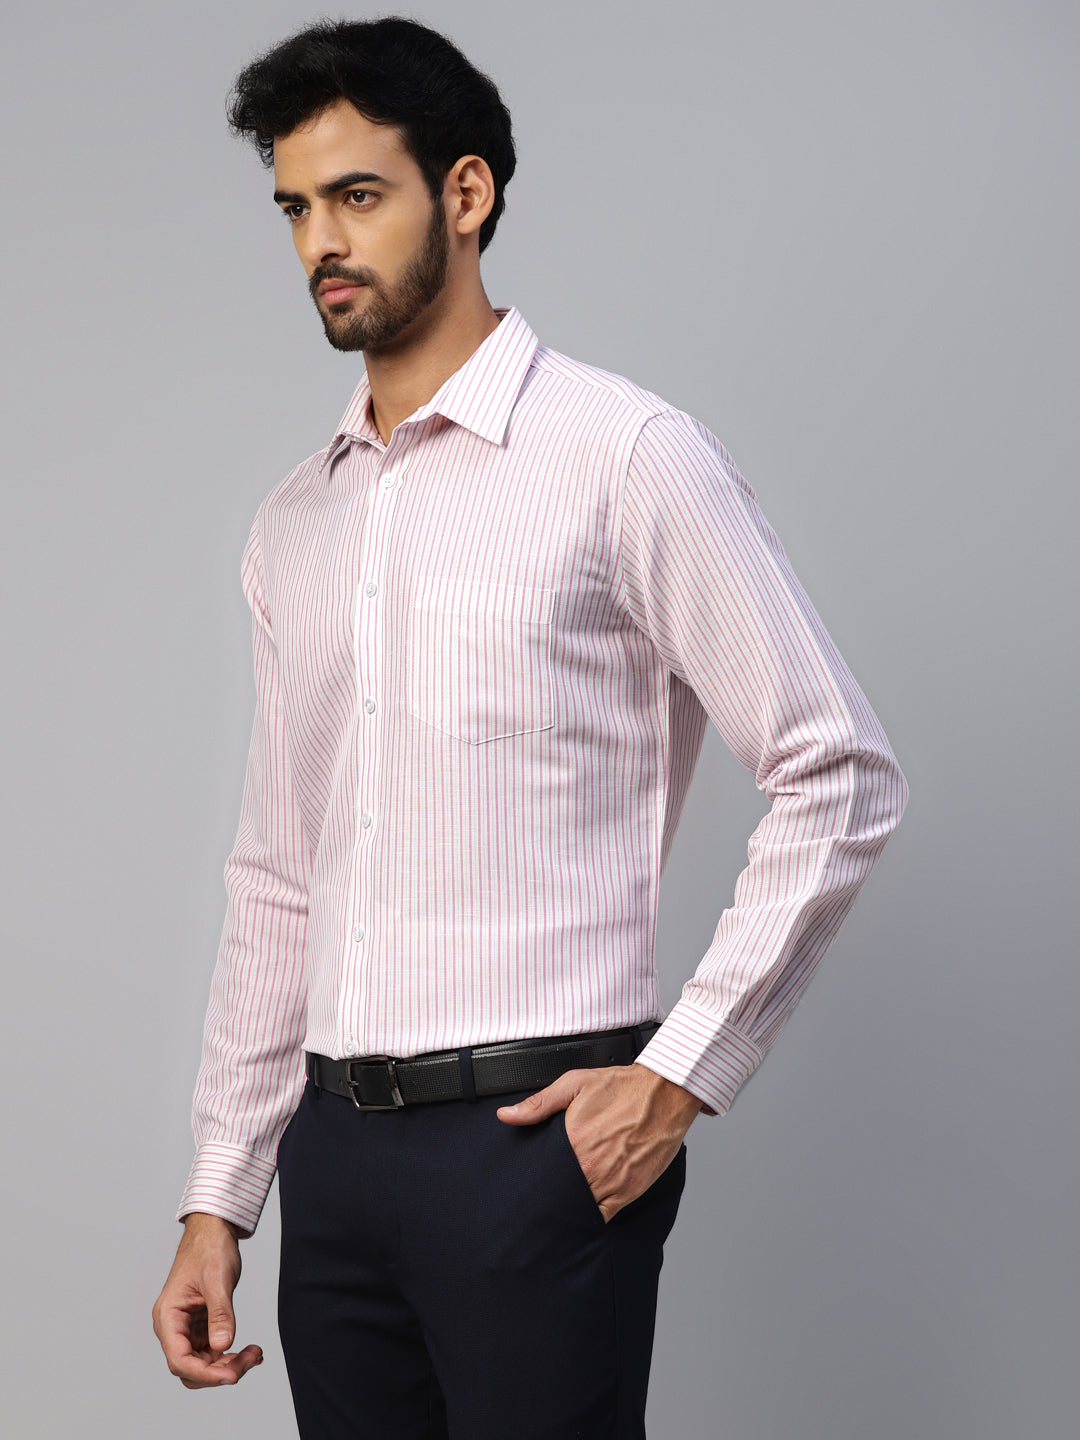 Men's Pink & White Stripes Formal Shirt